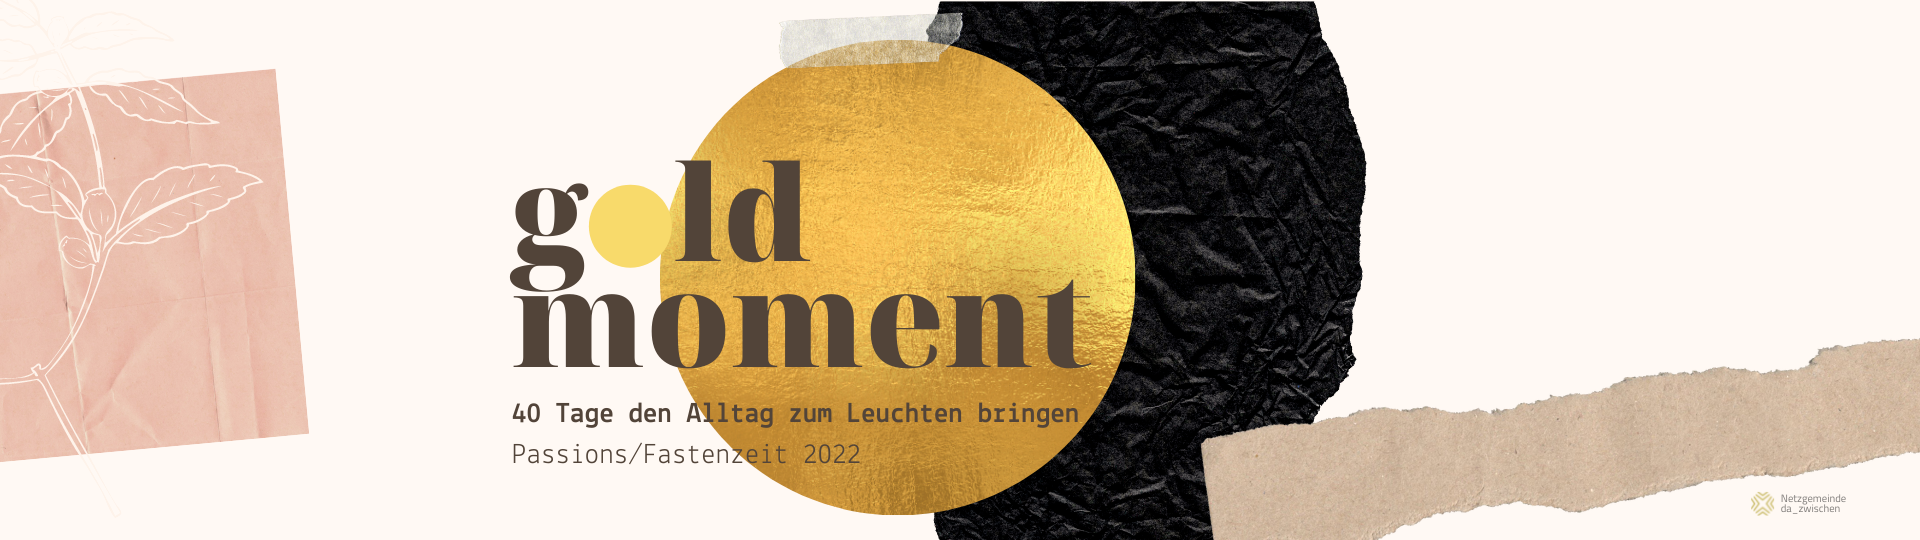 goldmoment Tempalte VORLAGEN 1920 × 540 px - Goldmoment